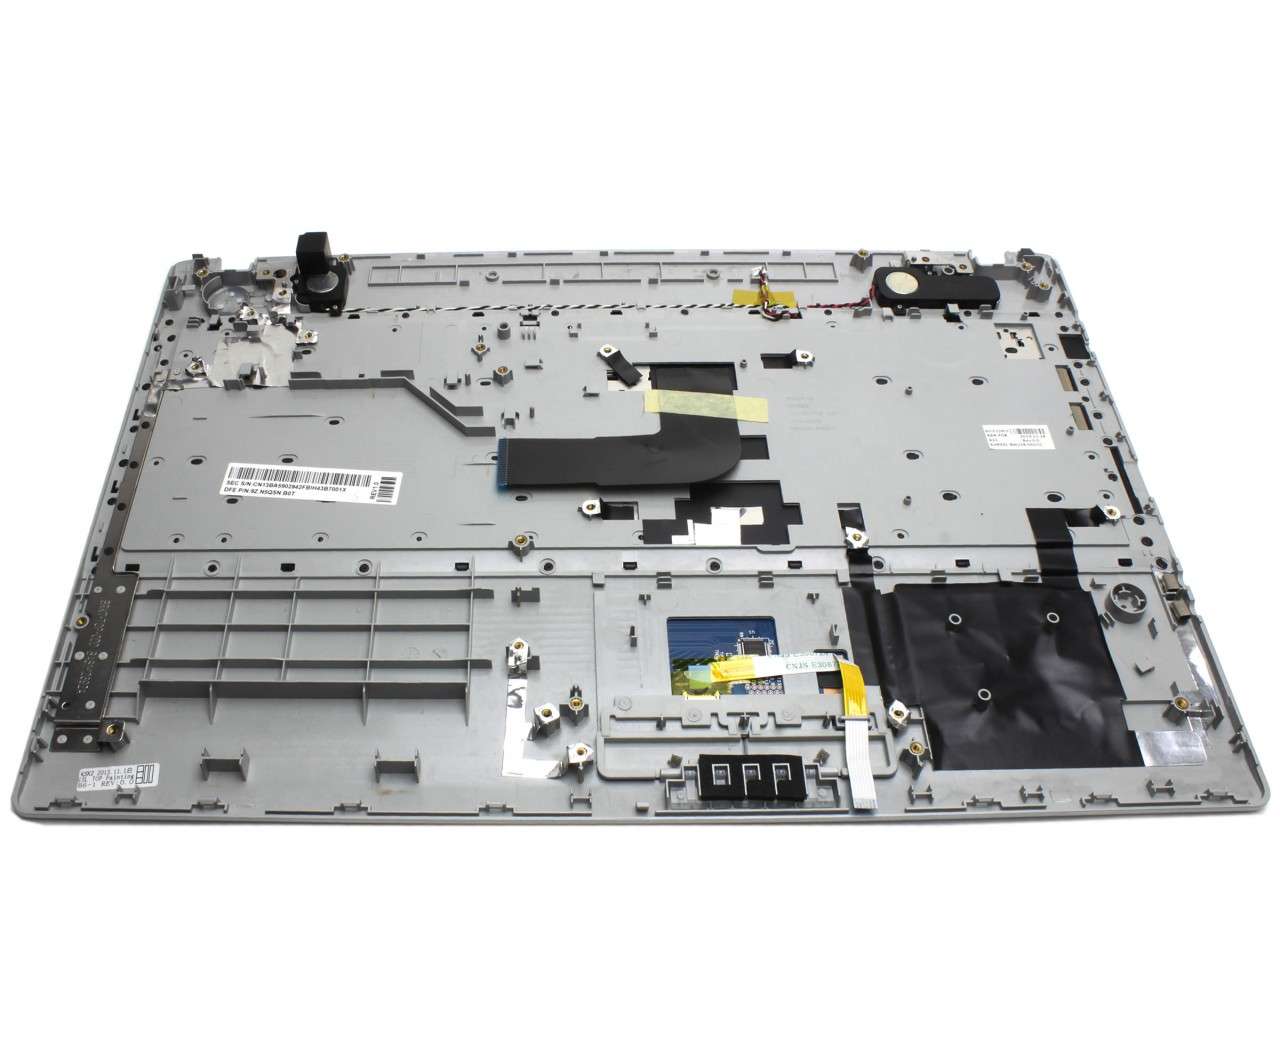 Tastatura Samsung RV520 neagra cu Palmrest argintiu imagine 2021 powerlaptop.ro